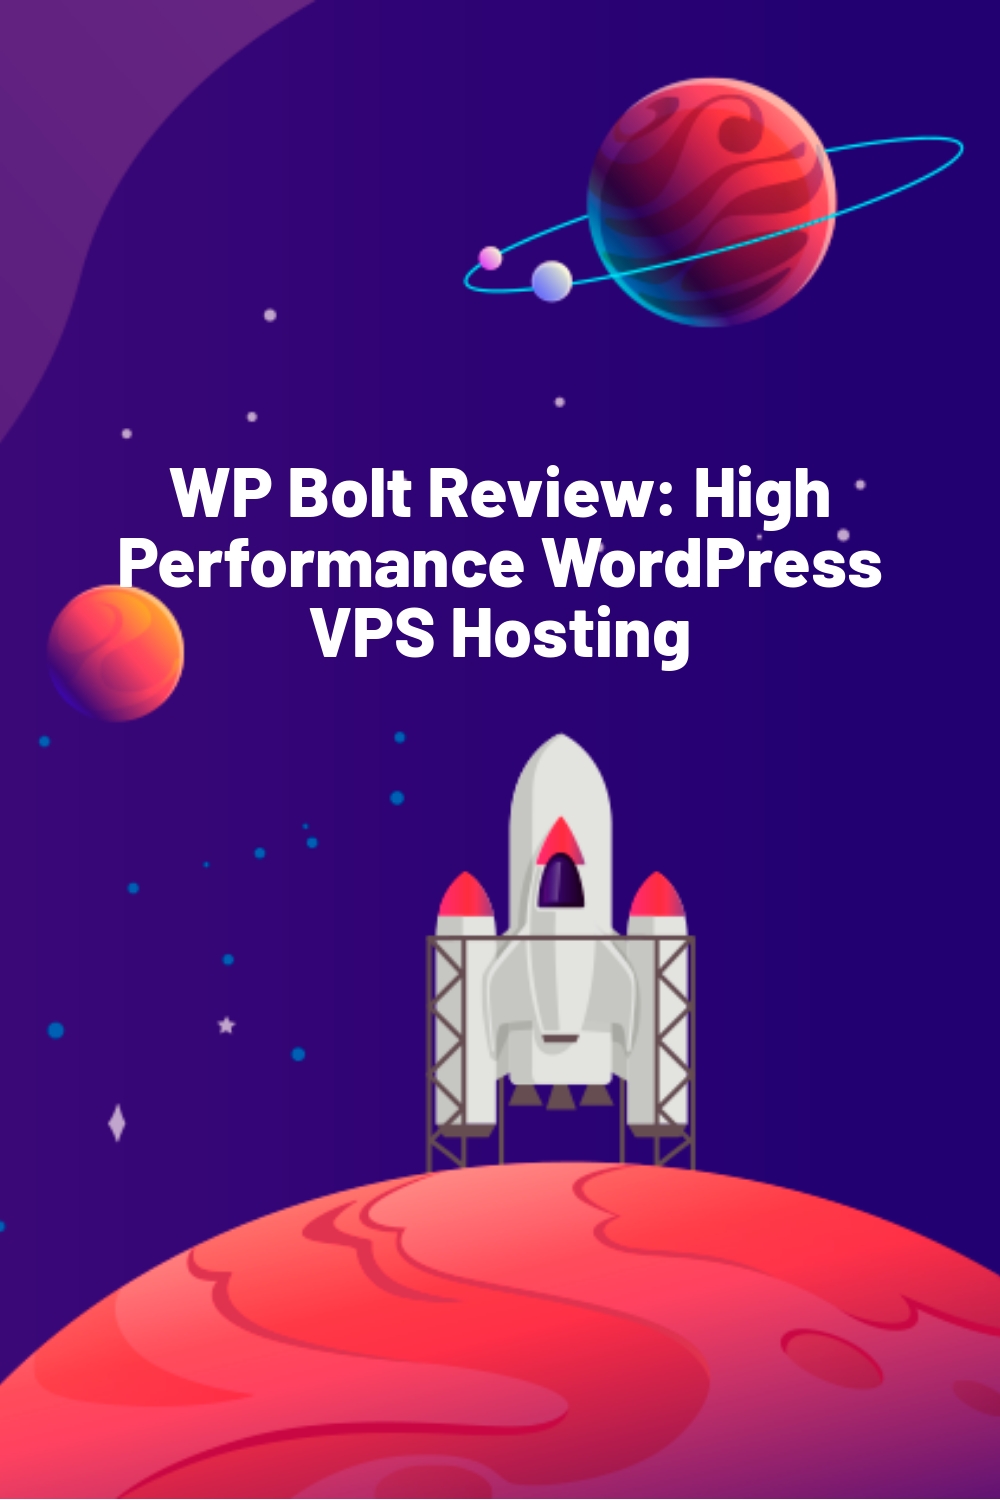 WP Bolt Review: High Performance WordPress VPS Hosting